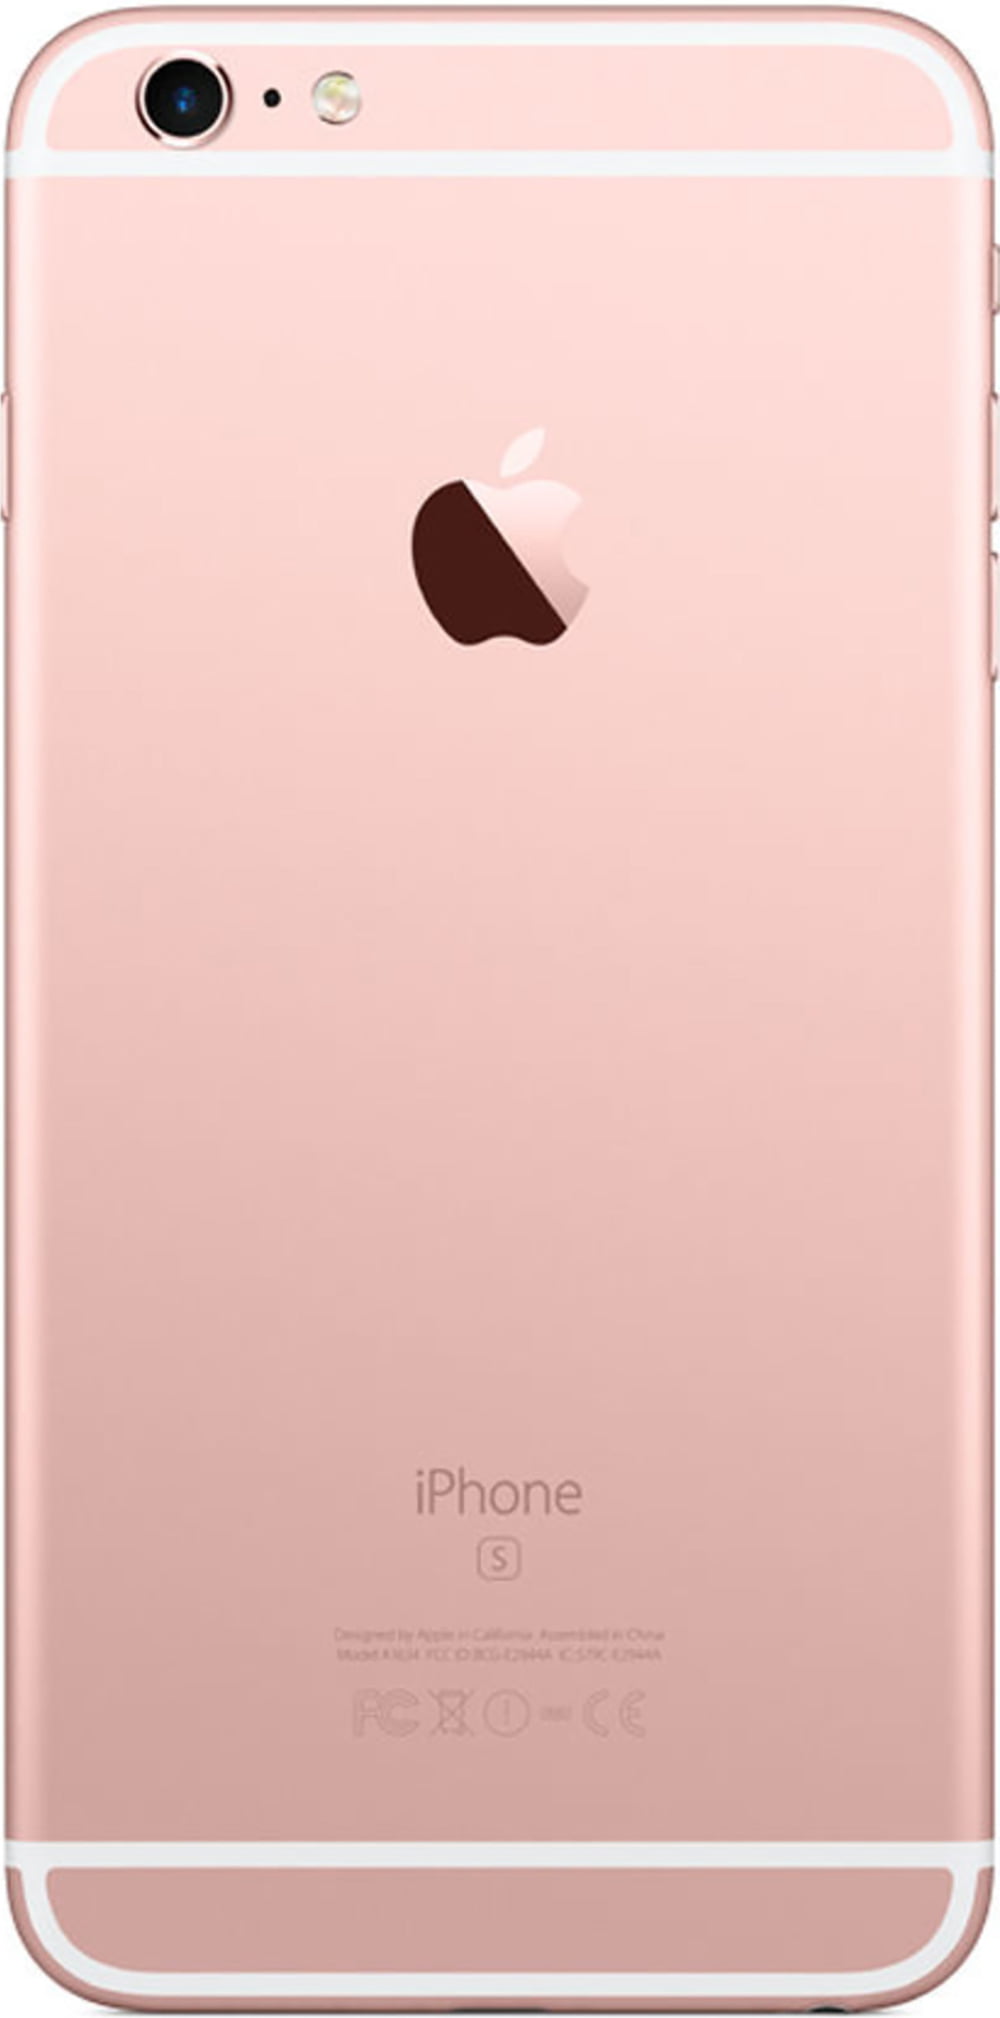 Apple iPhone 6S Plus 64GB - GSM Unlocked Smartphone - Rose Gold 